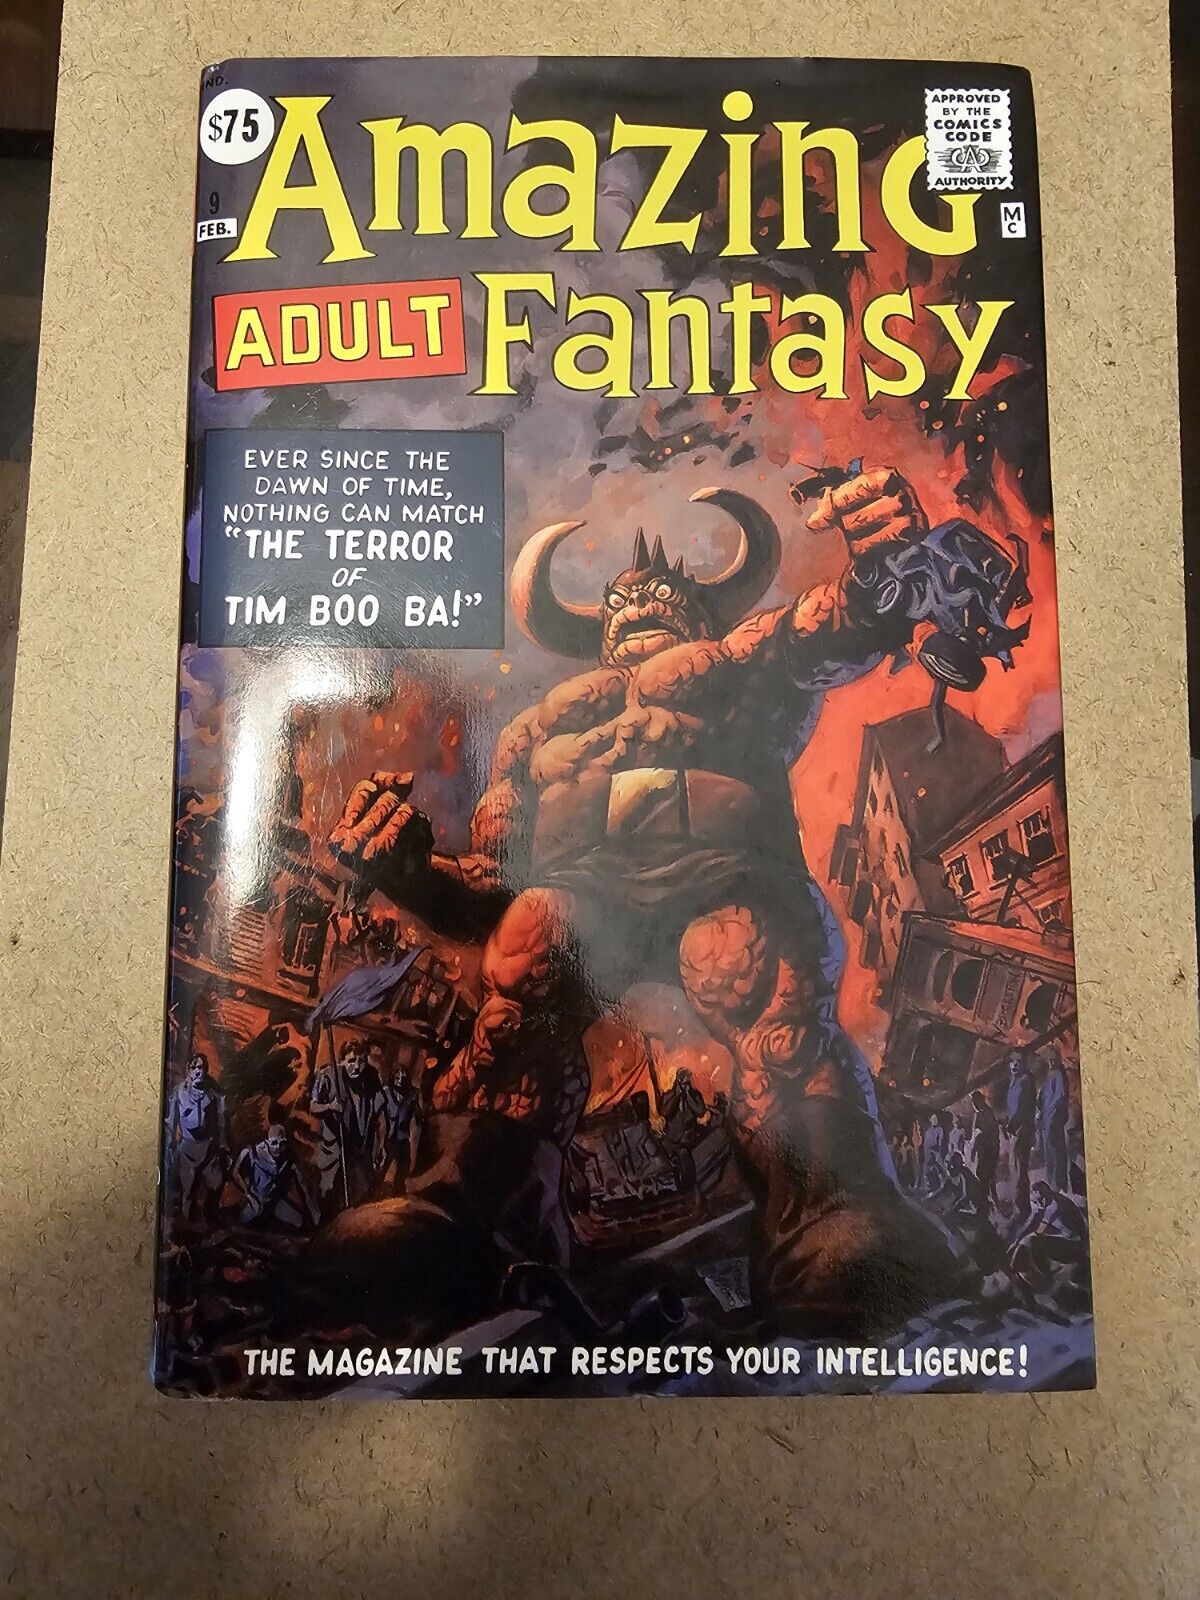 1962 Amazing Adult Fantasy #9  Stan Lee & Steve Ditko Art NM. NEVER READ.